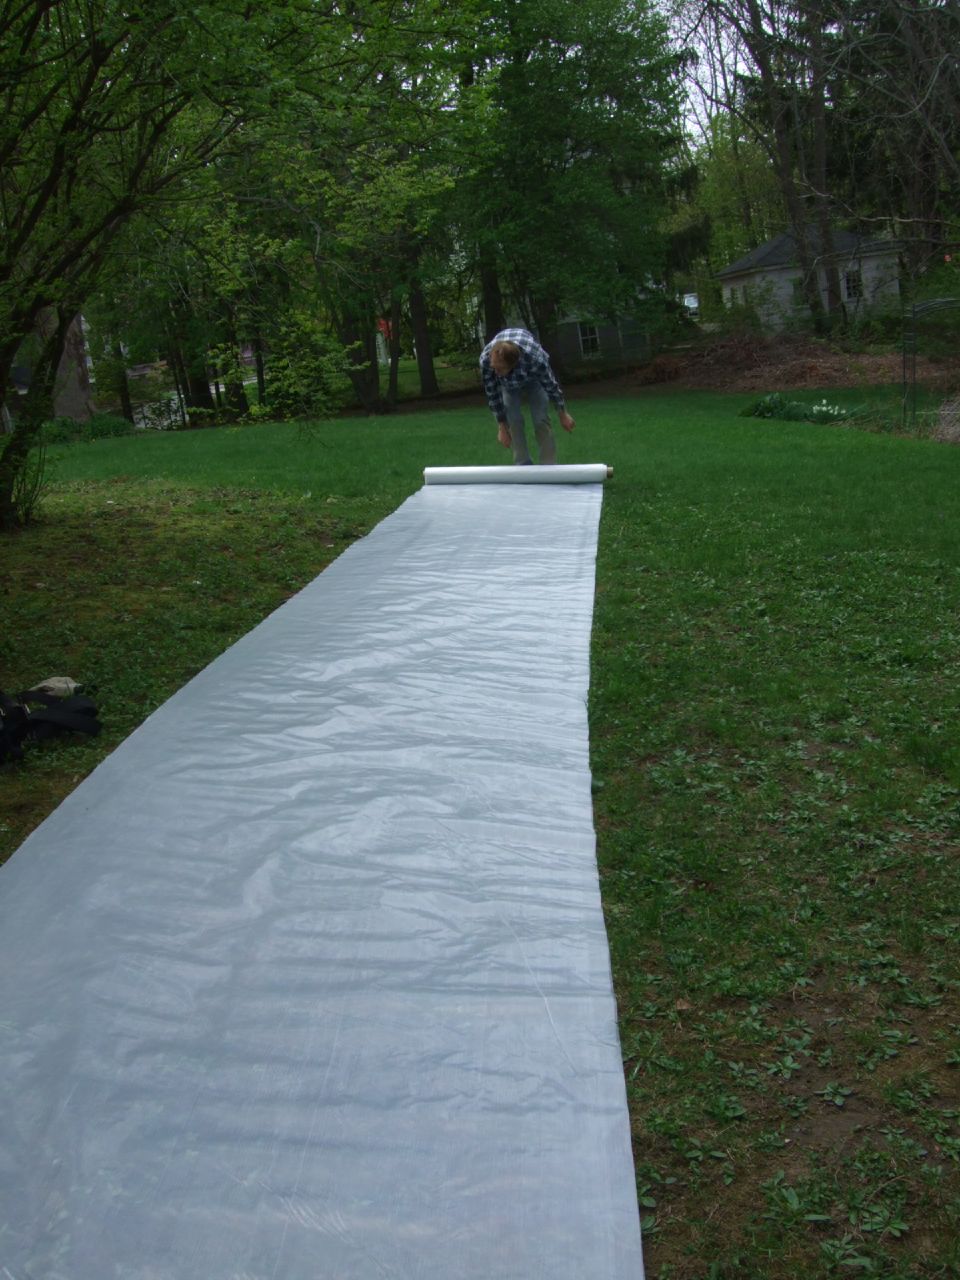 a man preparing his skateboard to come down a ramp